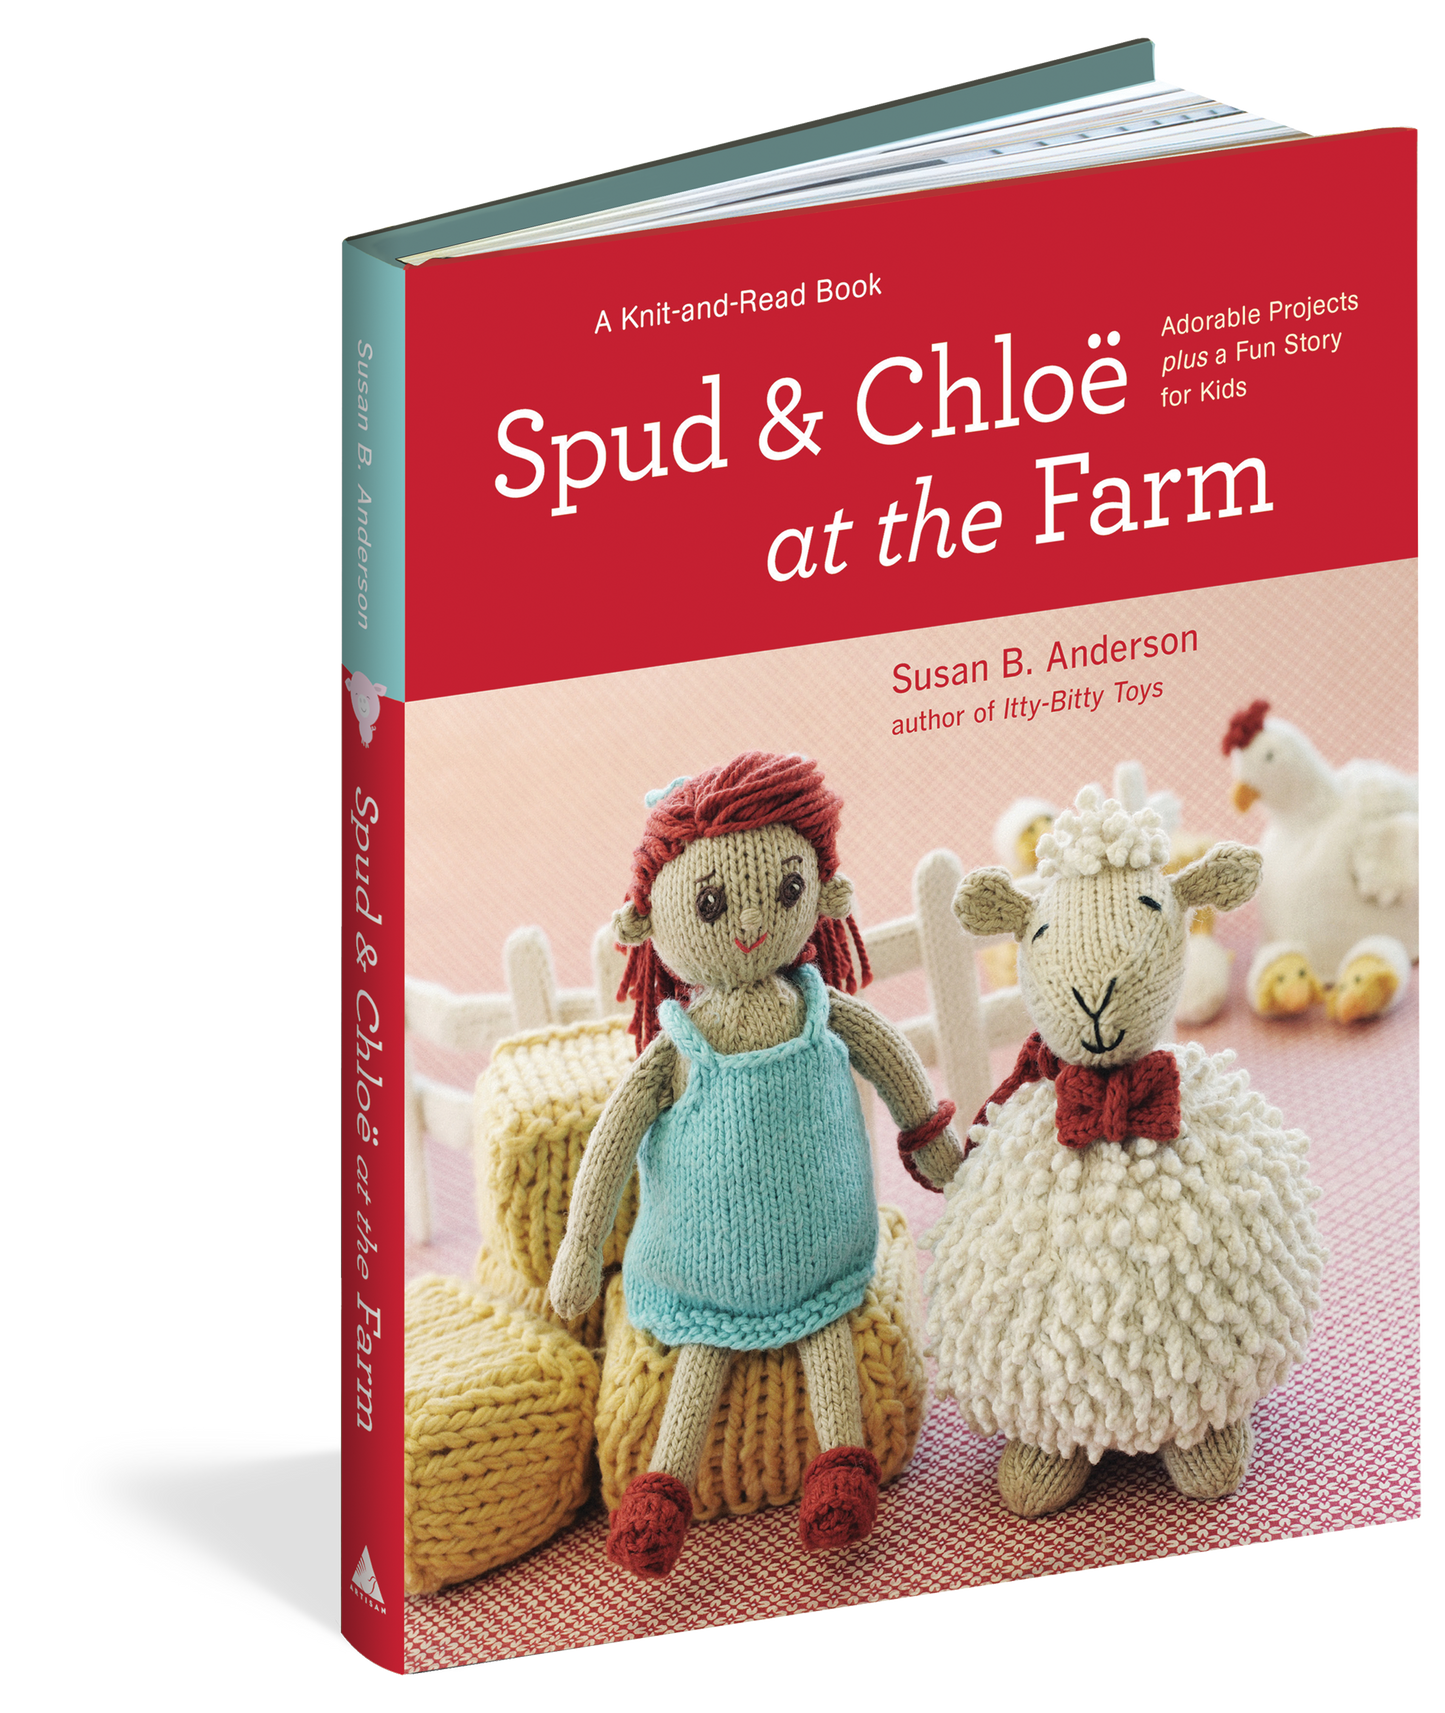 Spud & Chloe at the Farm by Susan B. Anderson